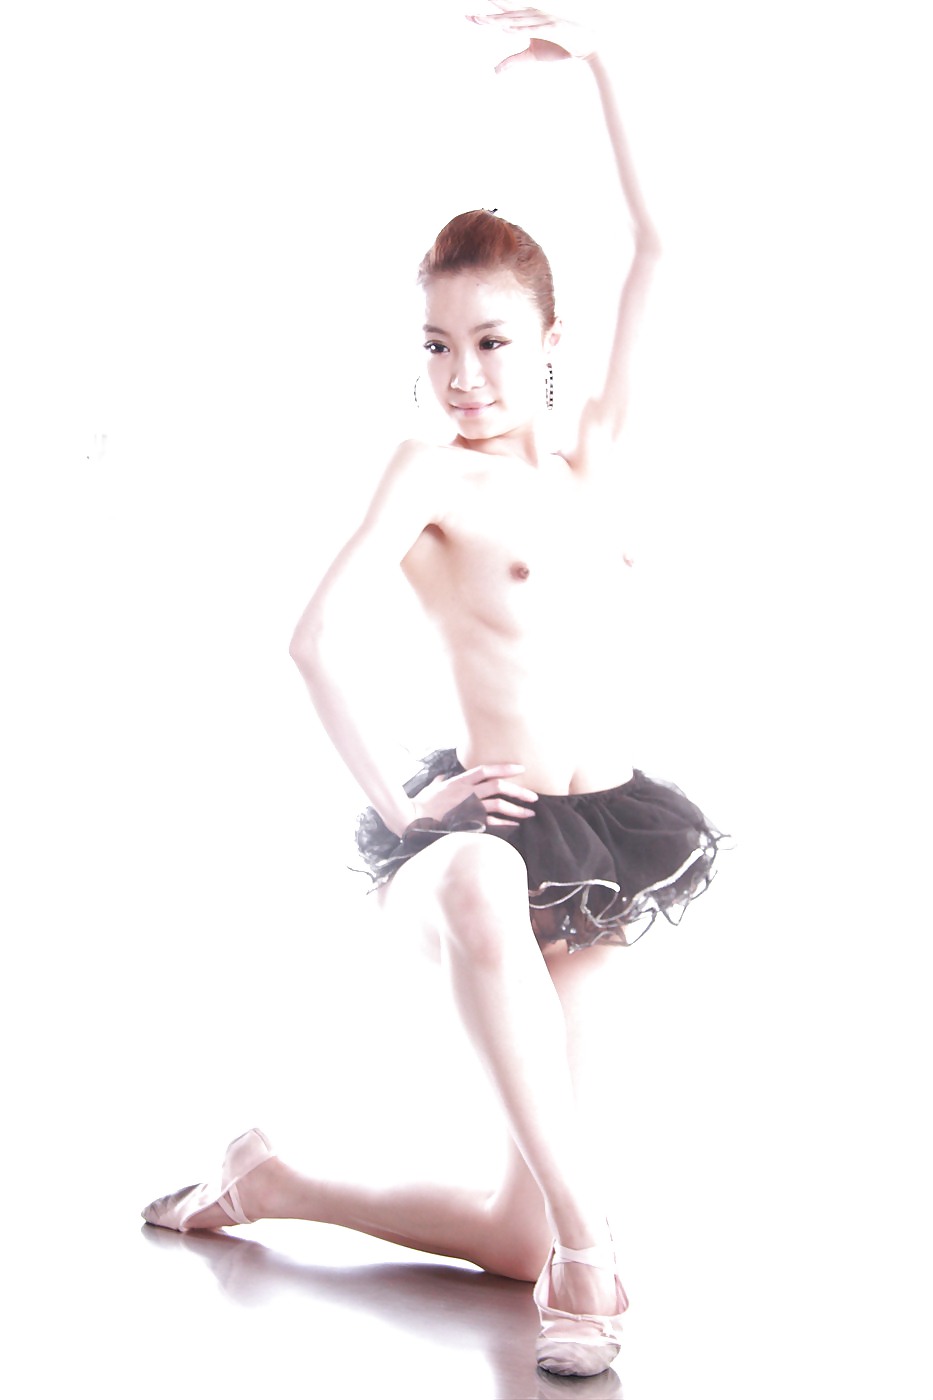 Scatti in studio di ballerina nuda asiatica (ll)
 #15829614